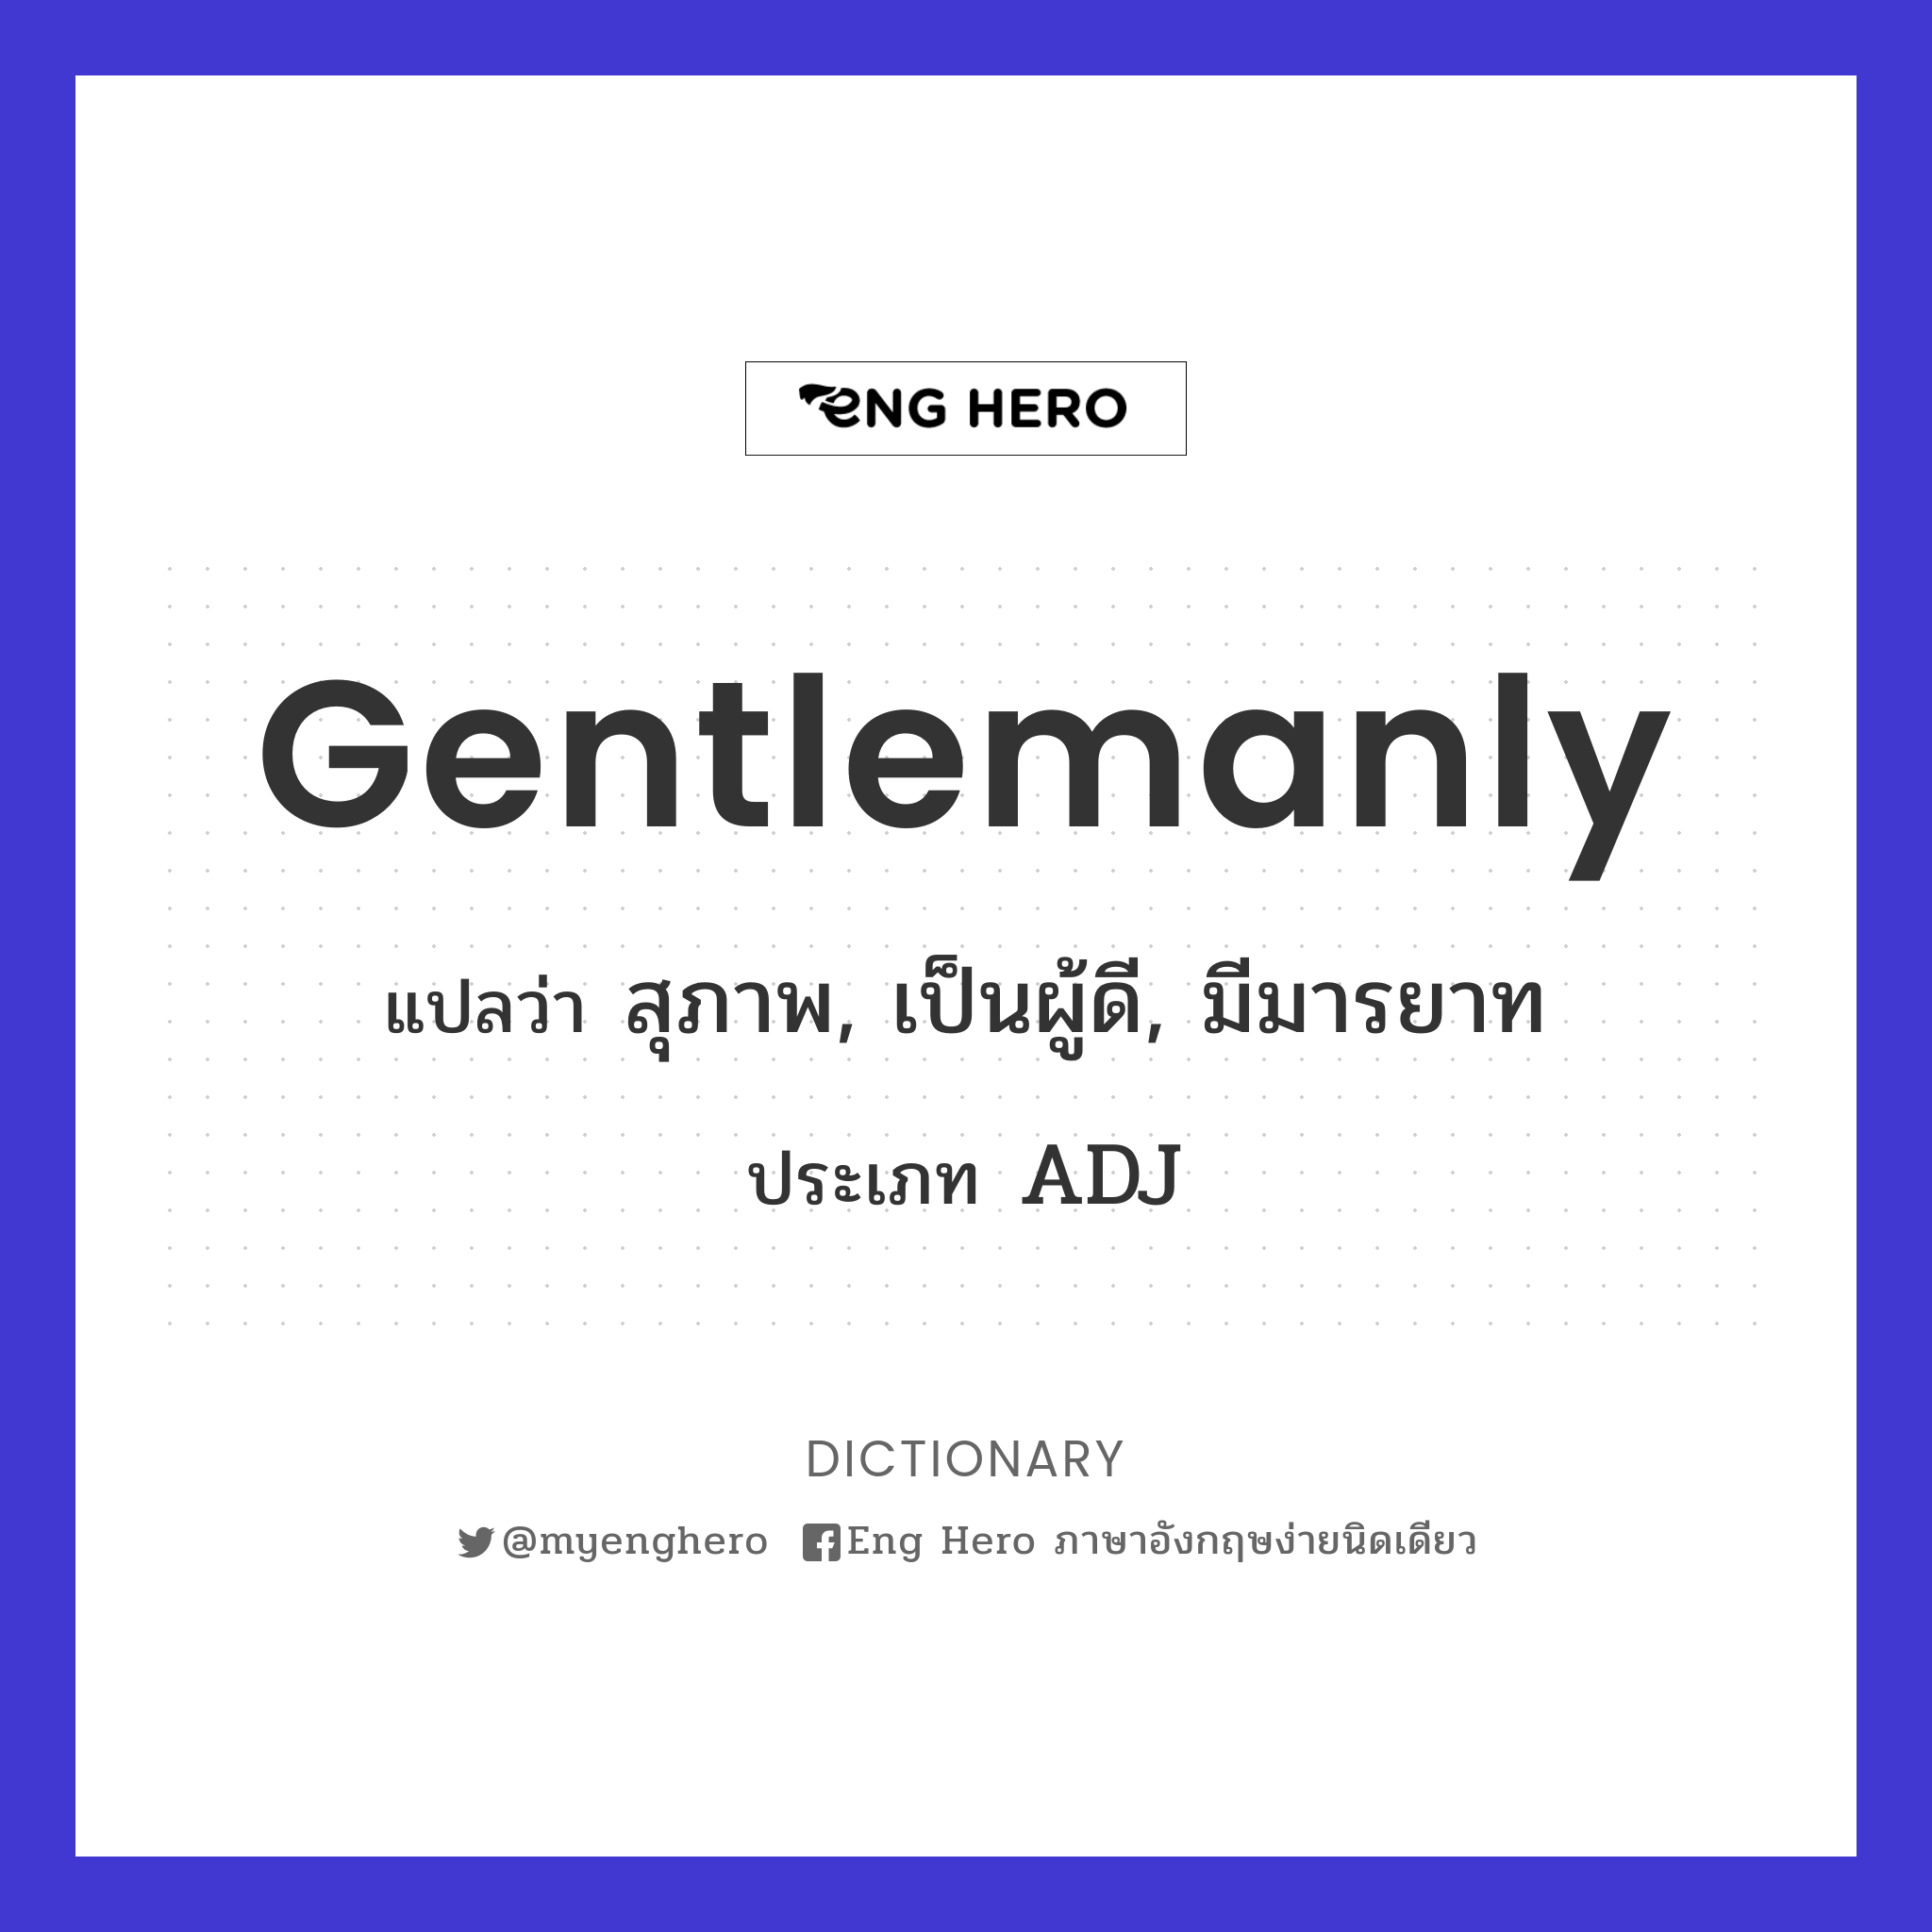 gentlemanly